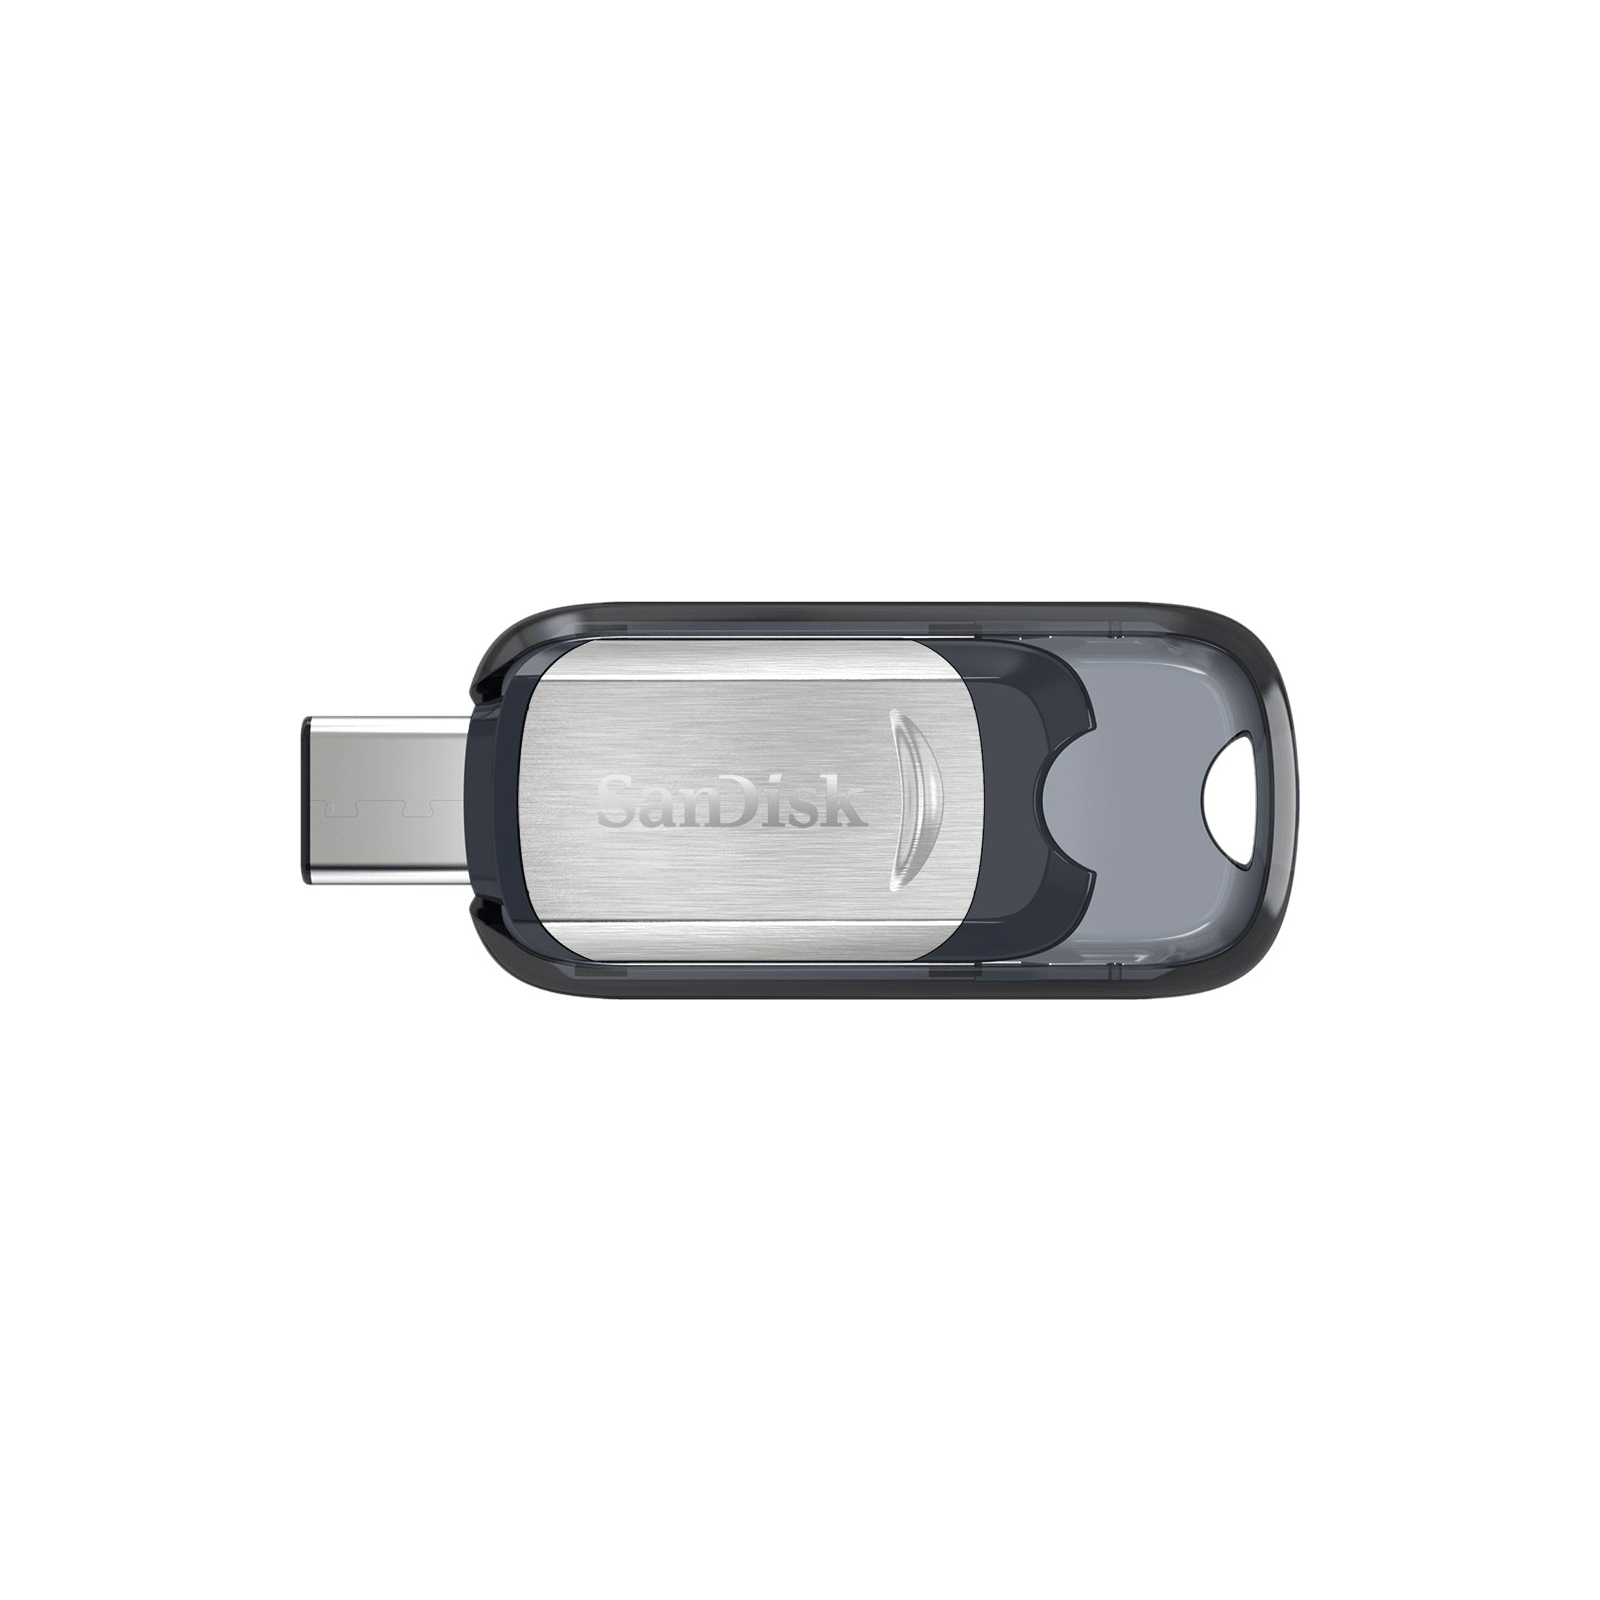 USB флеш накопитель SanDisk 32GB Ultra Type C USB 3.1 (SDCZ450-032G-G46) изображение 2